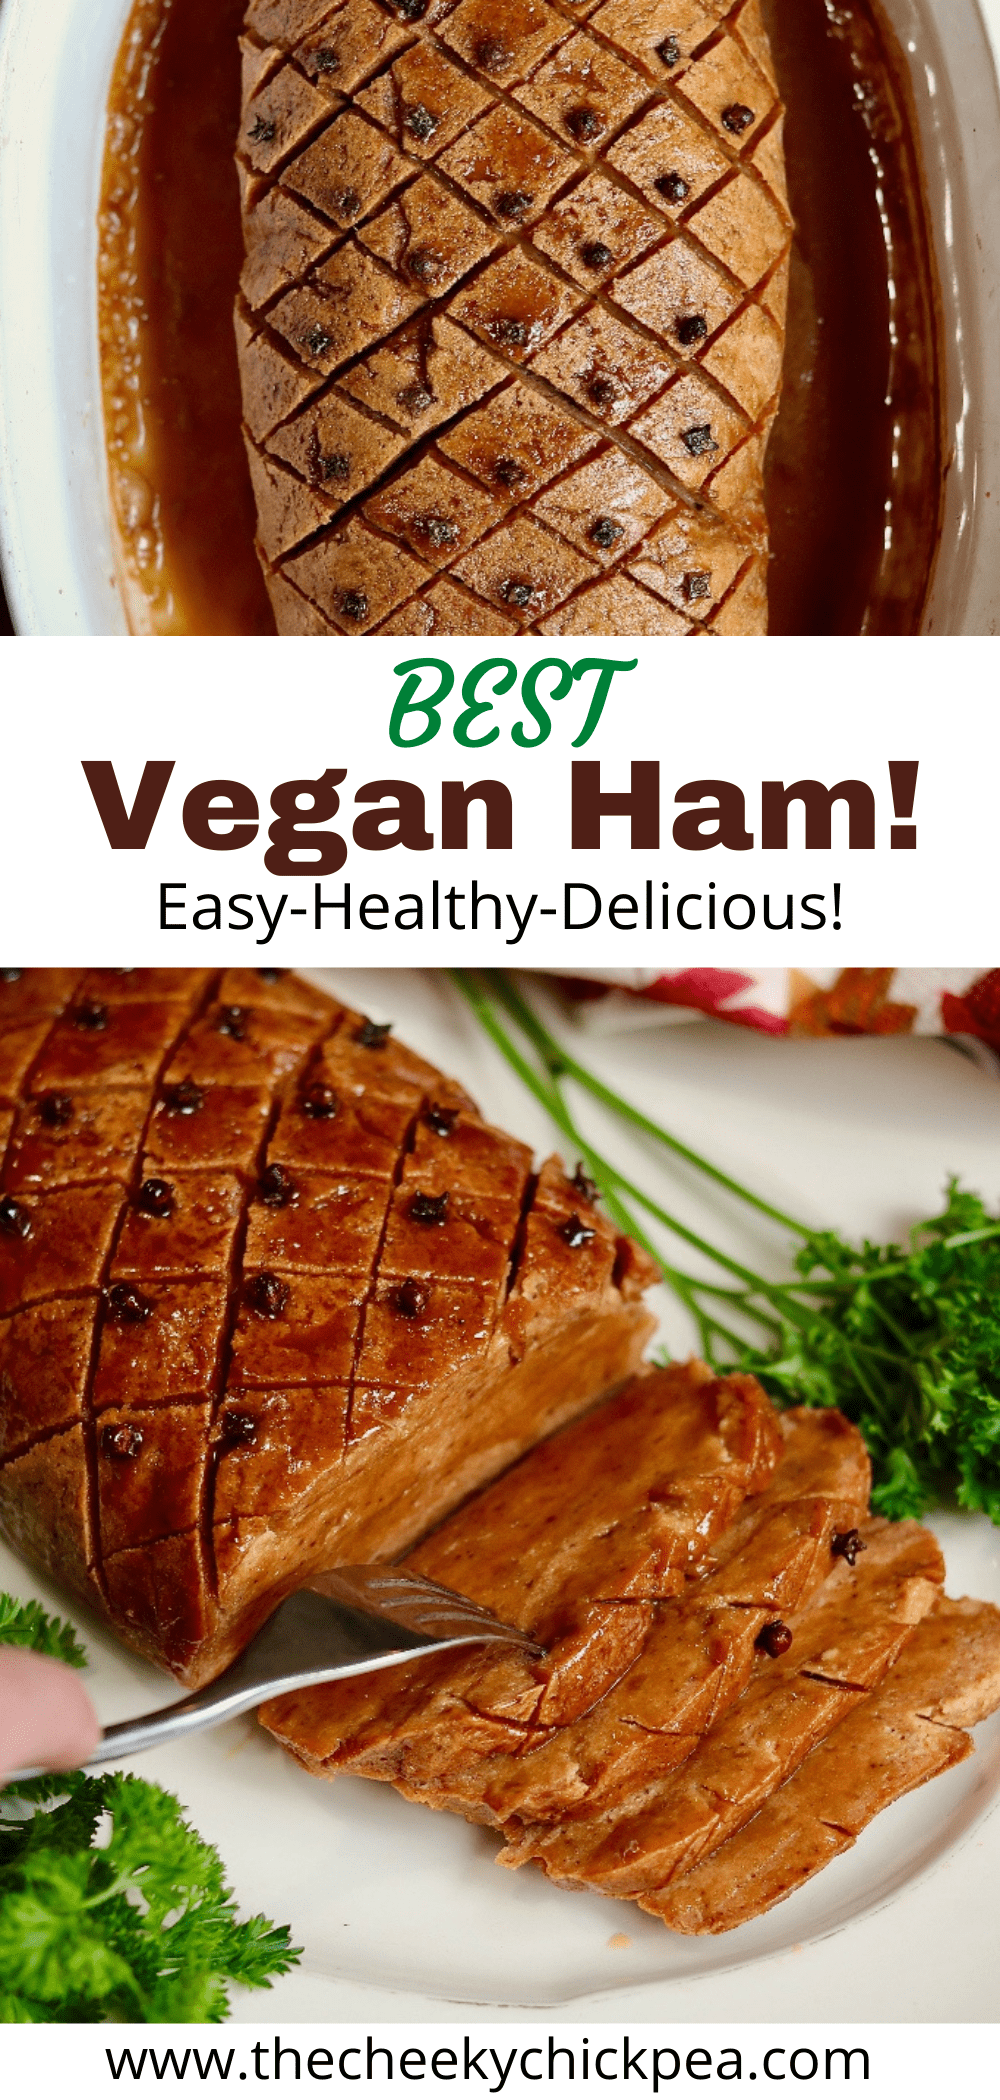 Best Vegan Ham Recipe (Seitan) - The Cheeky Chickpea